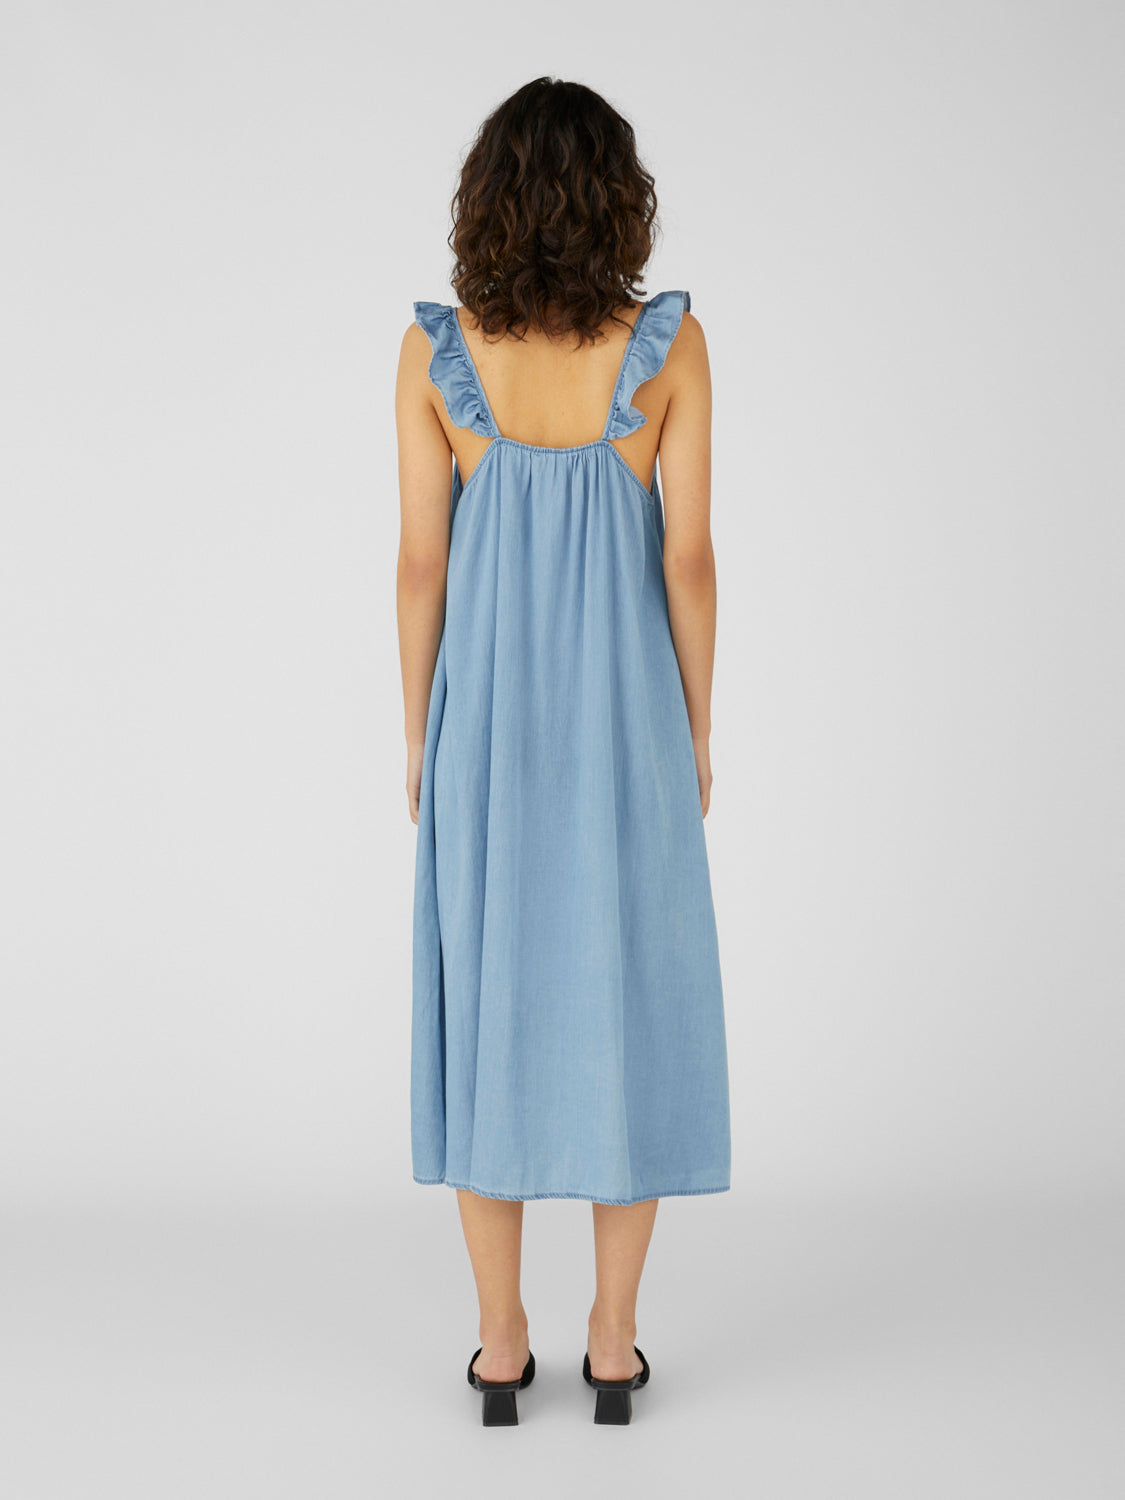 OBJLUCILLE Dress - Medium Blue Denim